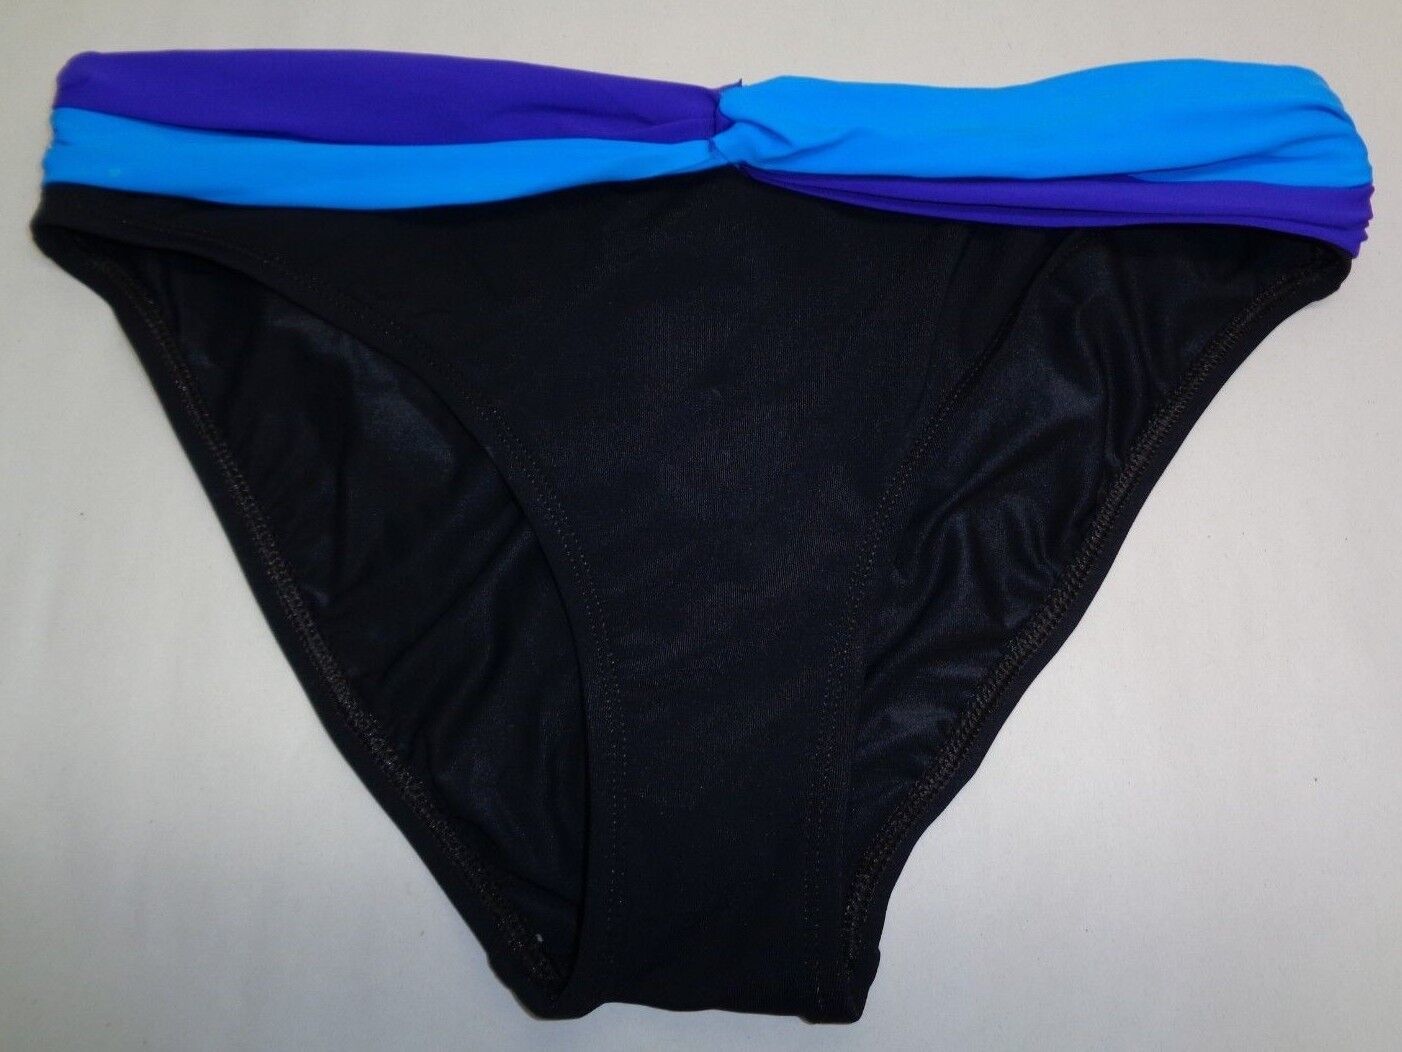 Primary image for Bleu Rod Beattie Size 14 AL129 Black Purple New Womens Bikini Bottom Swimwear